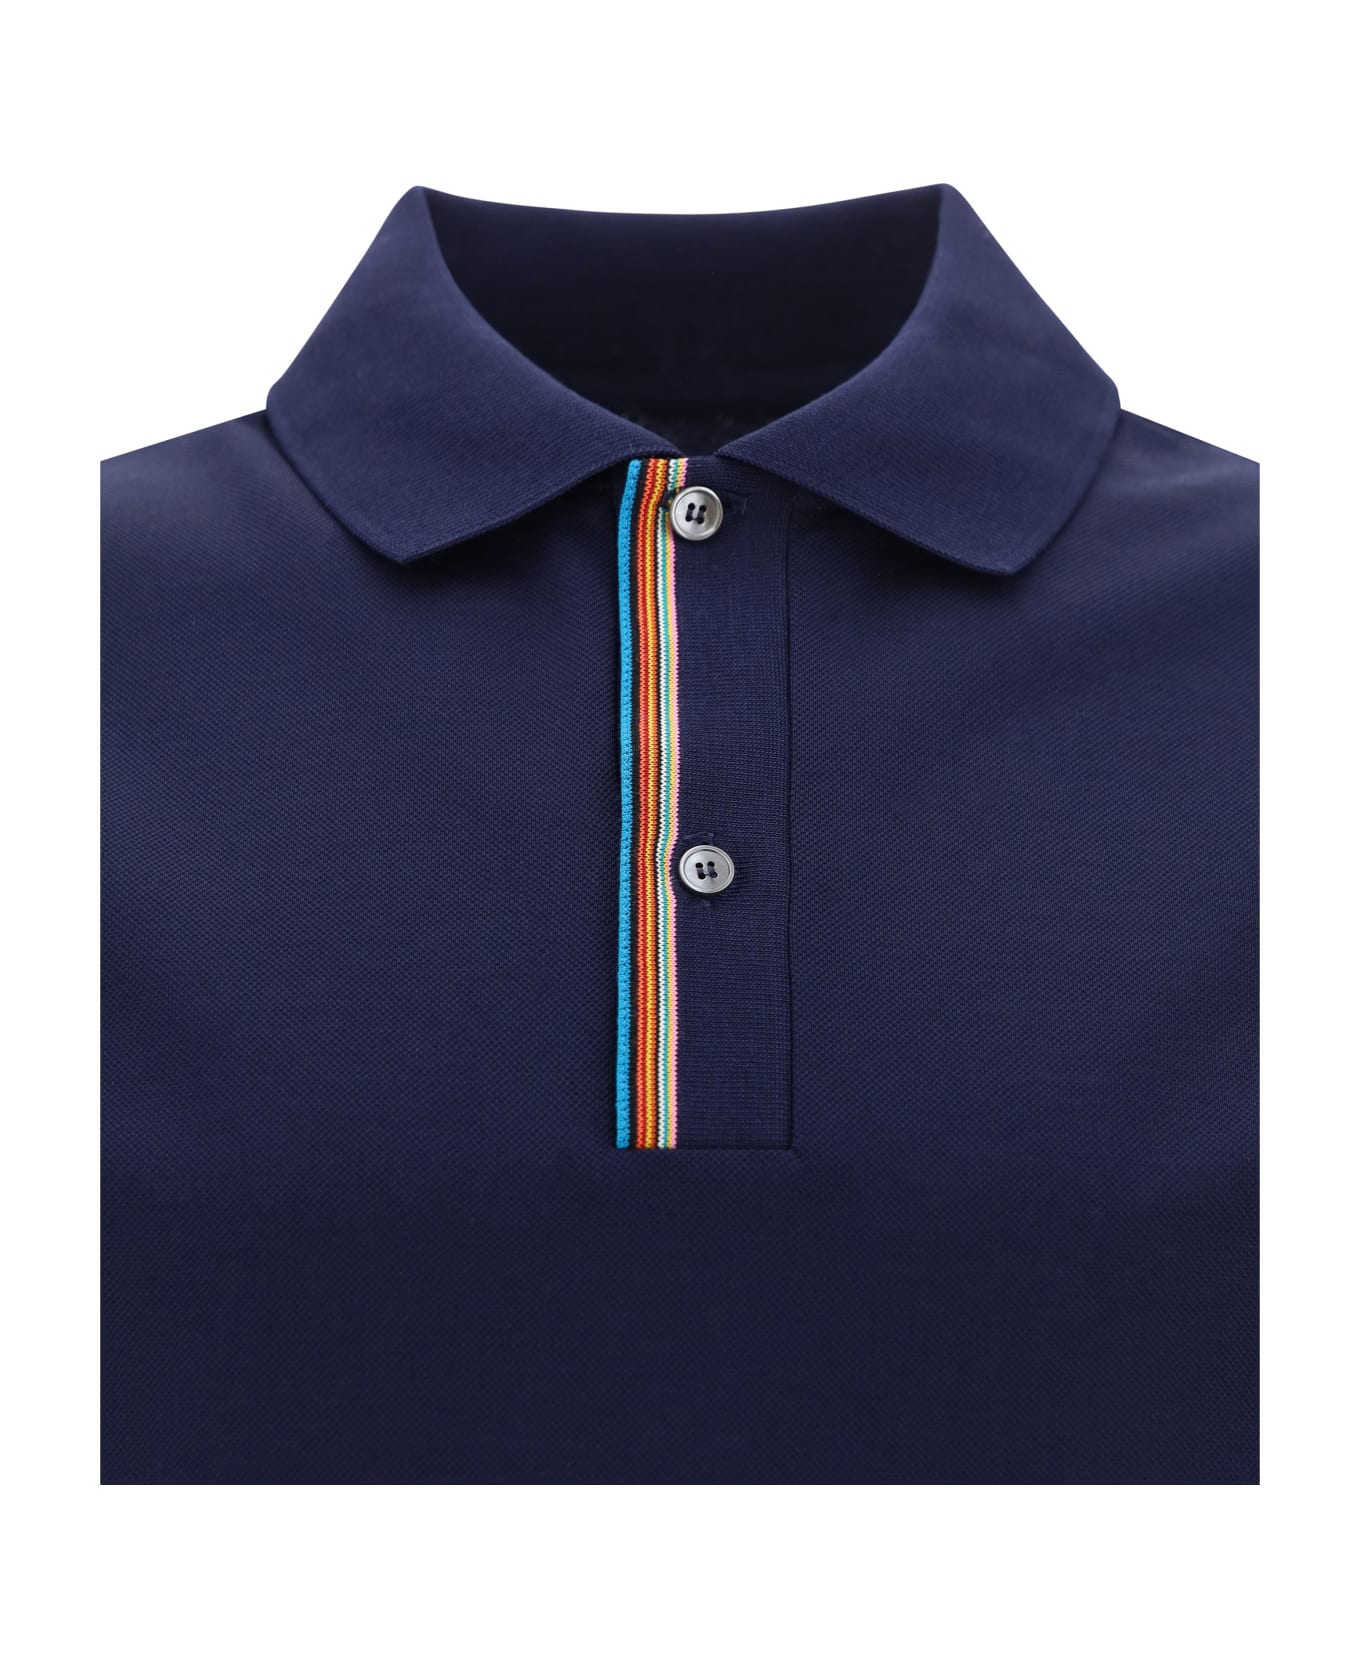 Paul Smith Polo Shirt - Dk_na ポロシャツ